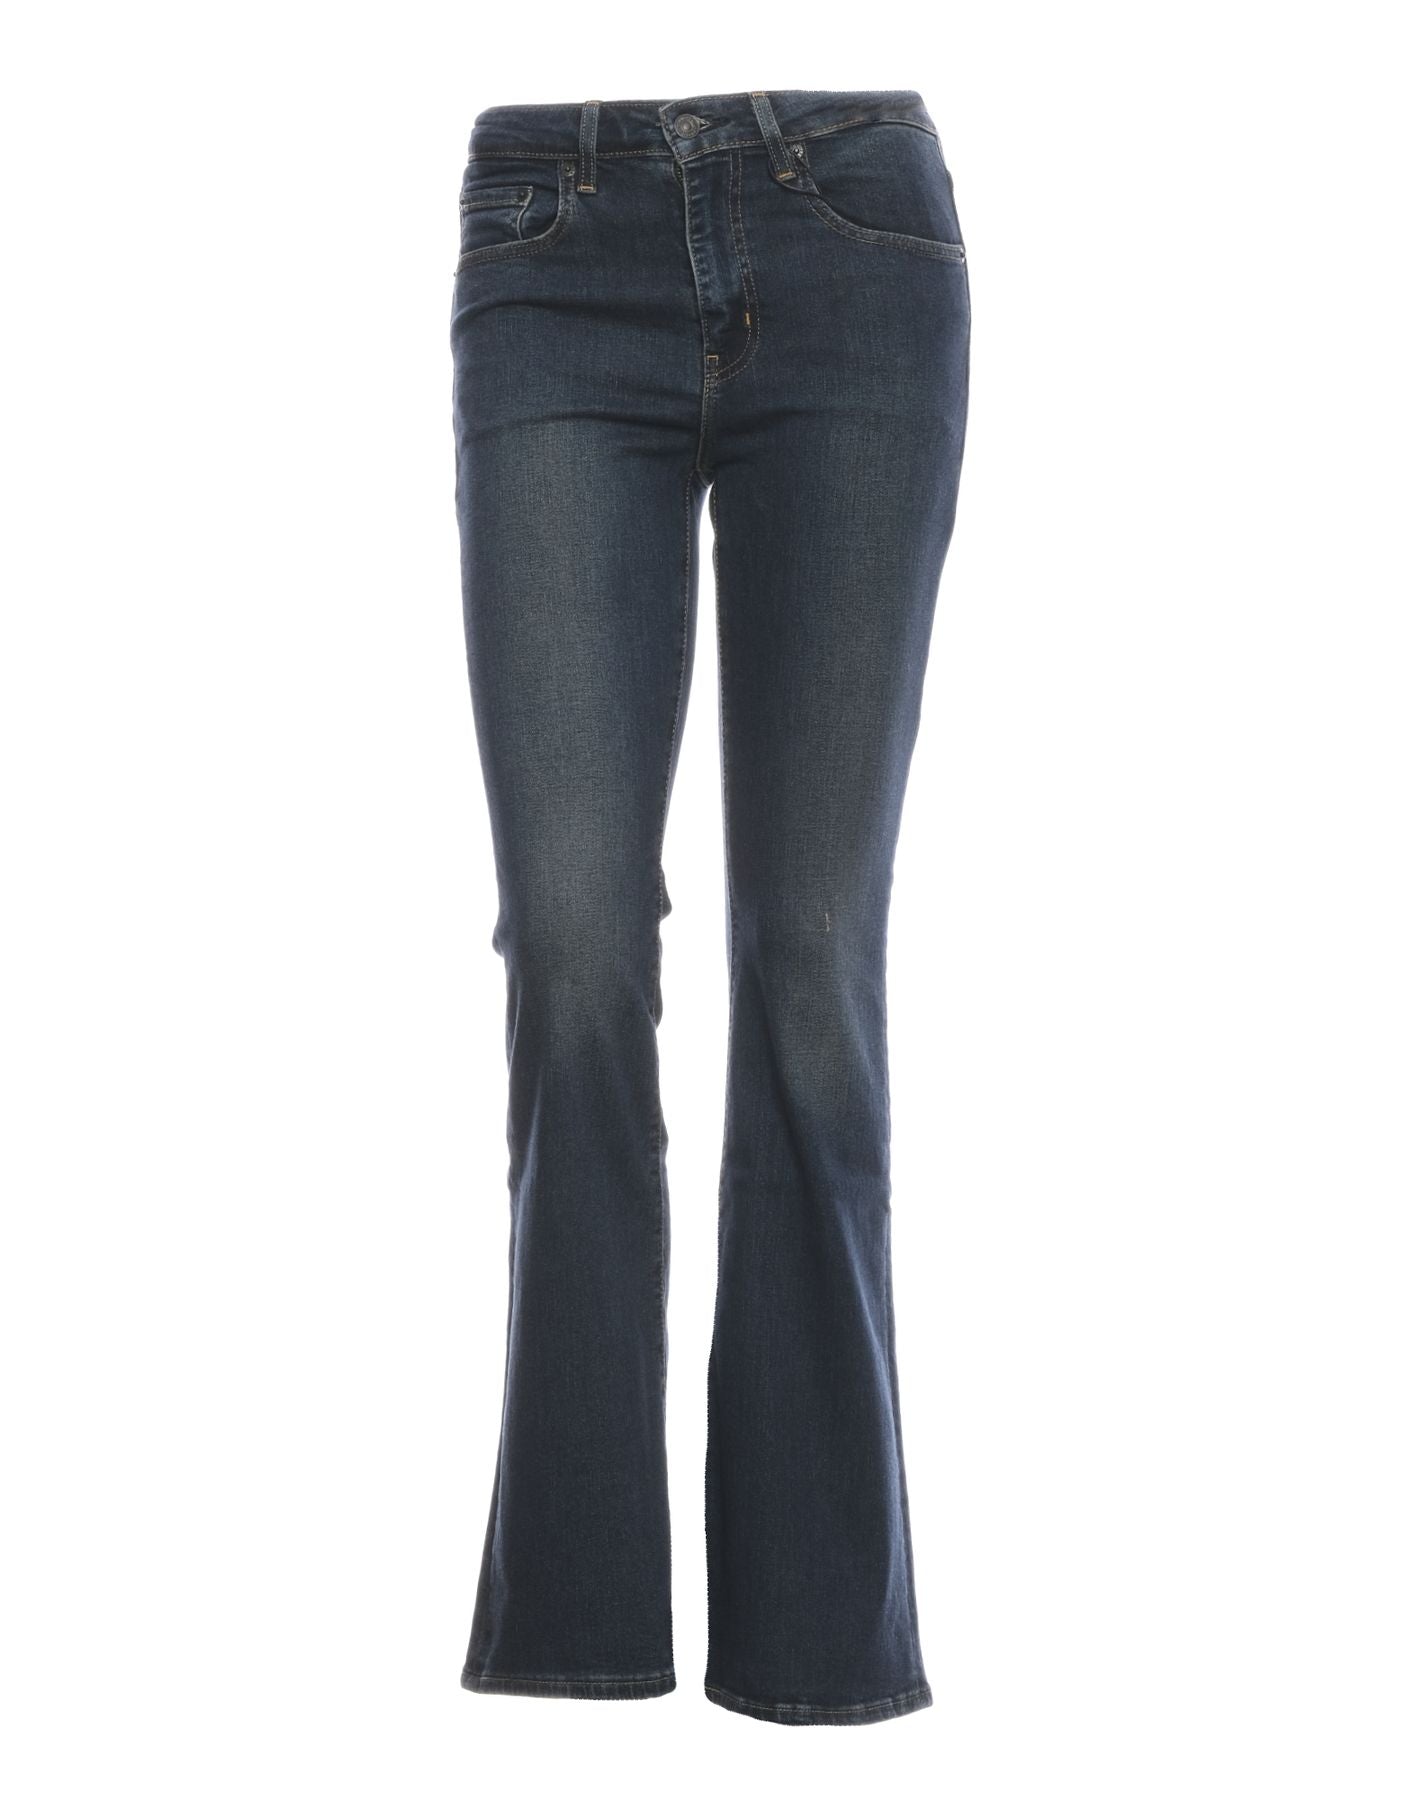 Jeans für Frau A34100014 Blue Swell Levi's